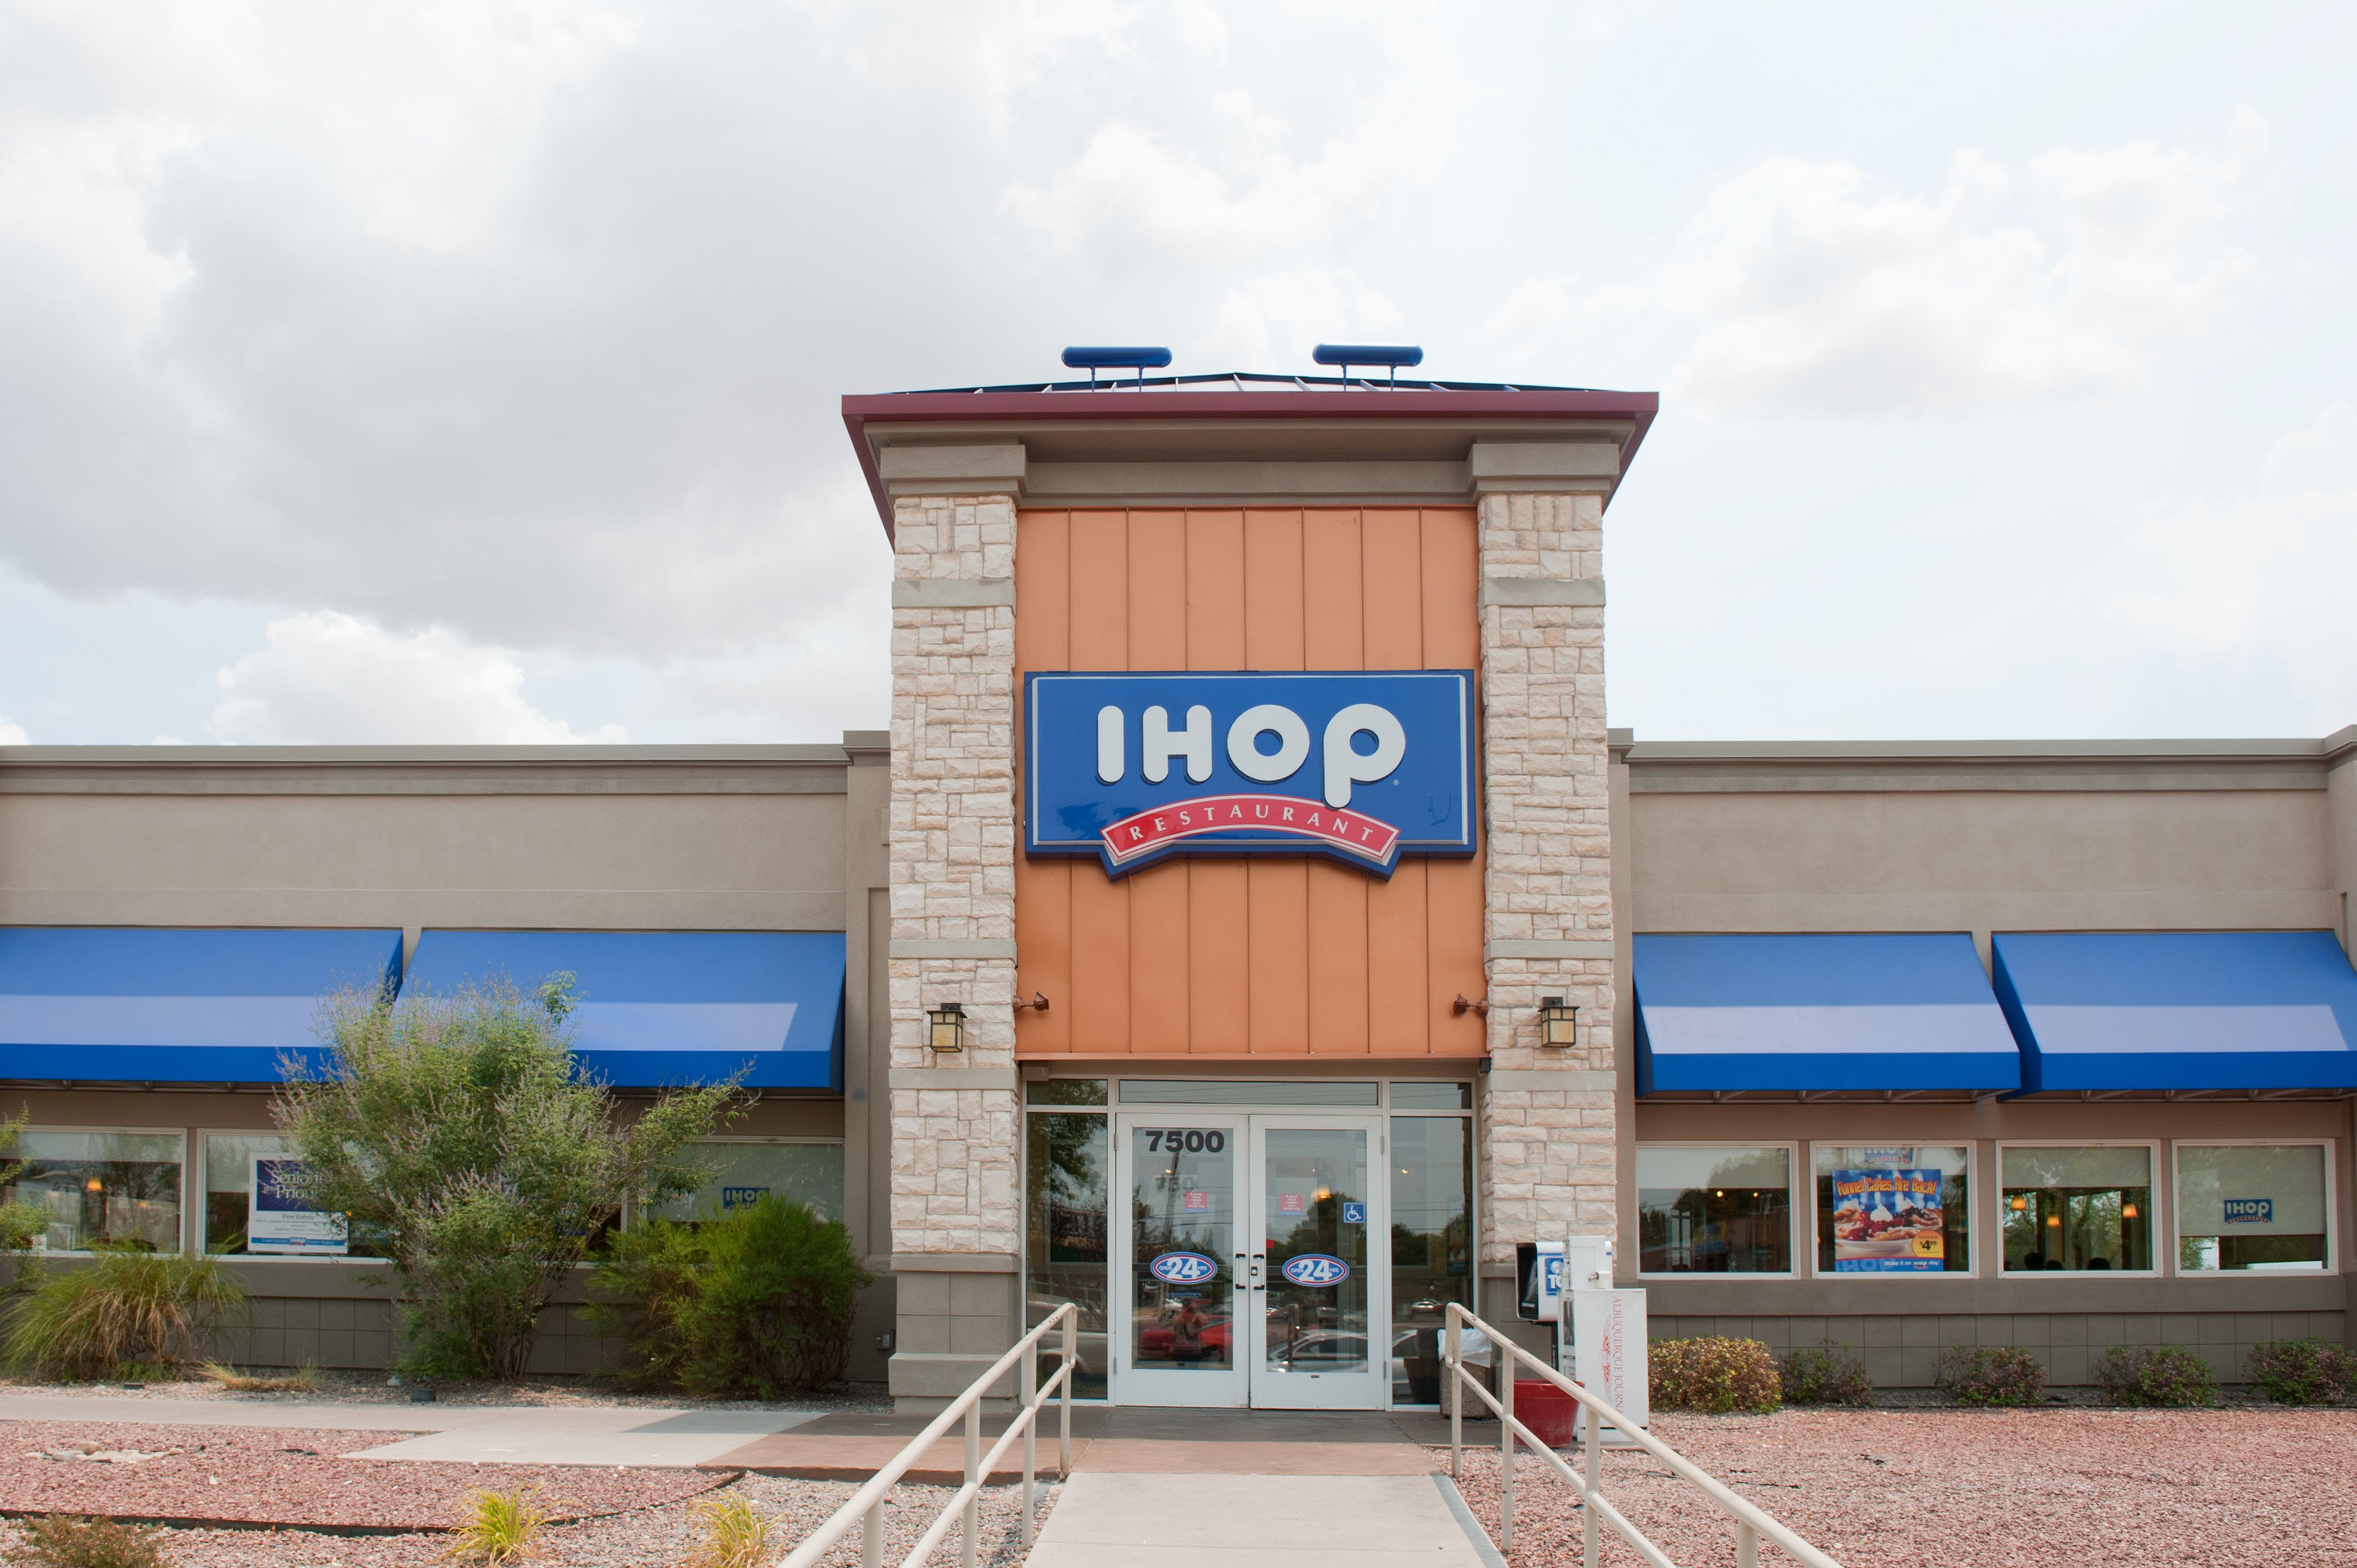 IHOP – International House of Pancakes